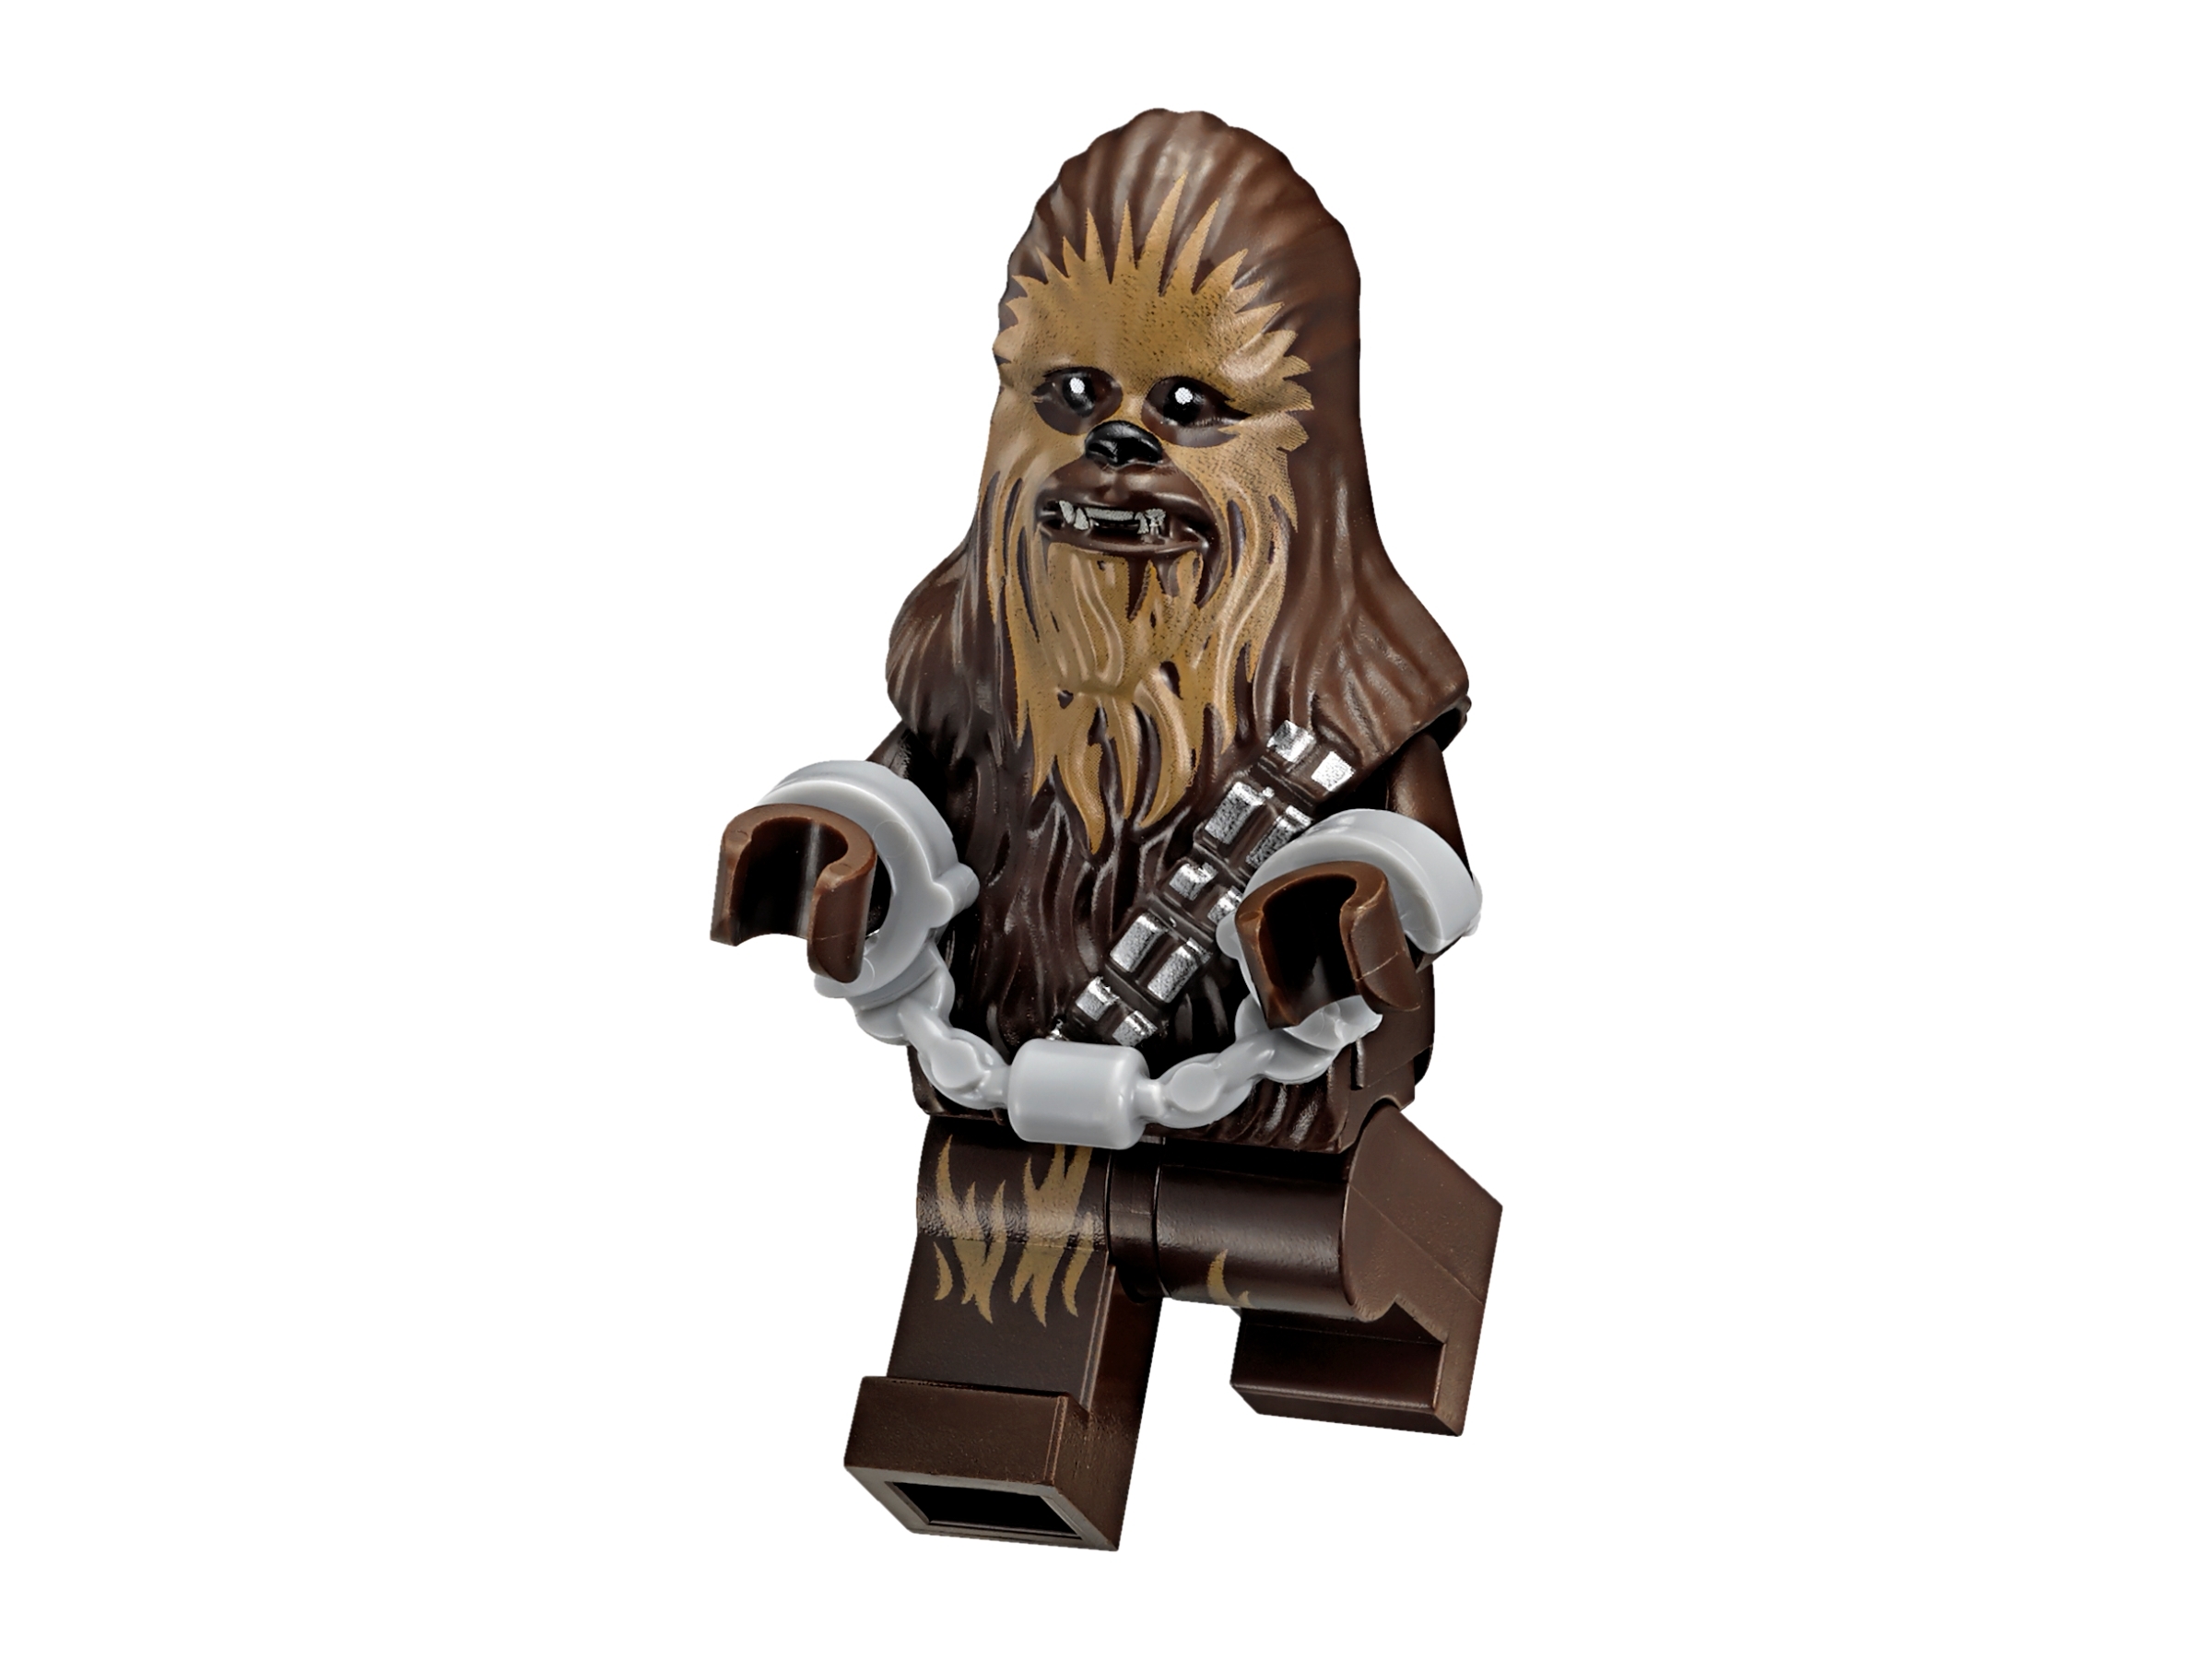 Lego Star Wars Skiff Guard from set 75174 